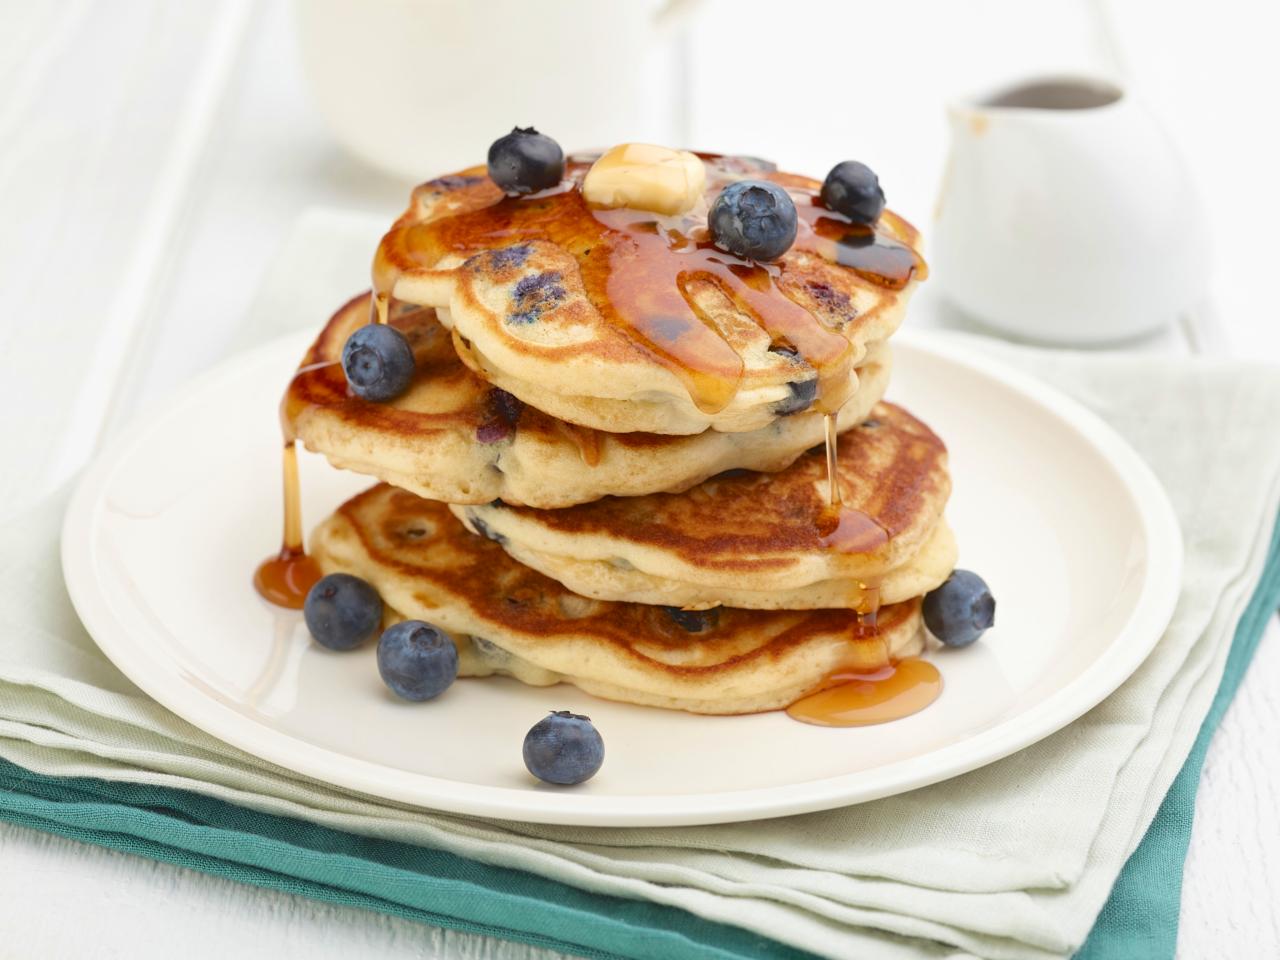 https://food.fnr.sndimg.com/content/dam/images/food/fullset/2013/1/11/0/YW0206H_blueberry-pancakes-recipe_s4x3.jpg.rend.hgtvcom.1280.960.suffix/1483737205050.jpeg